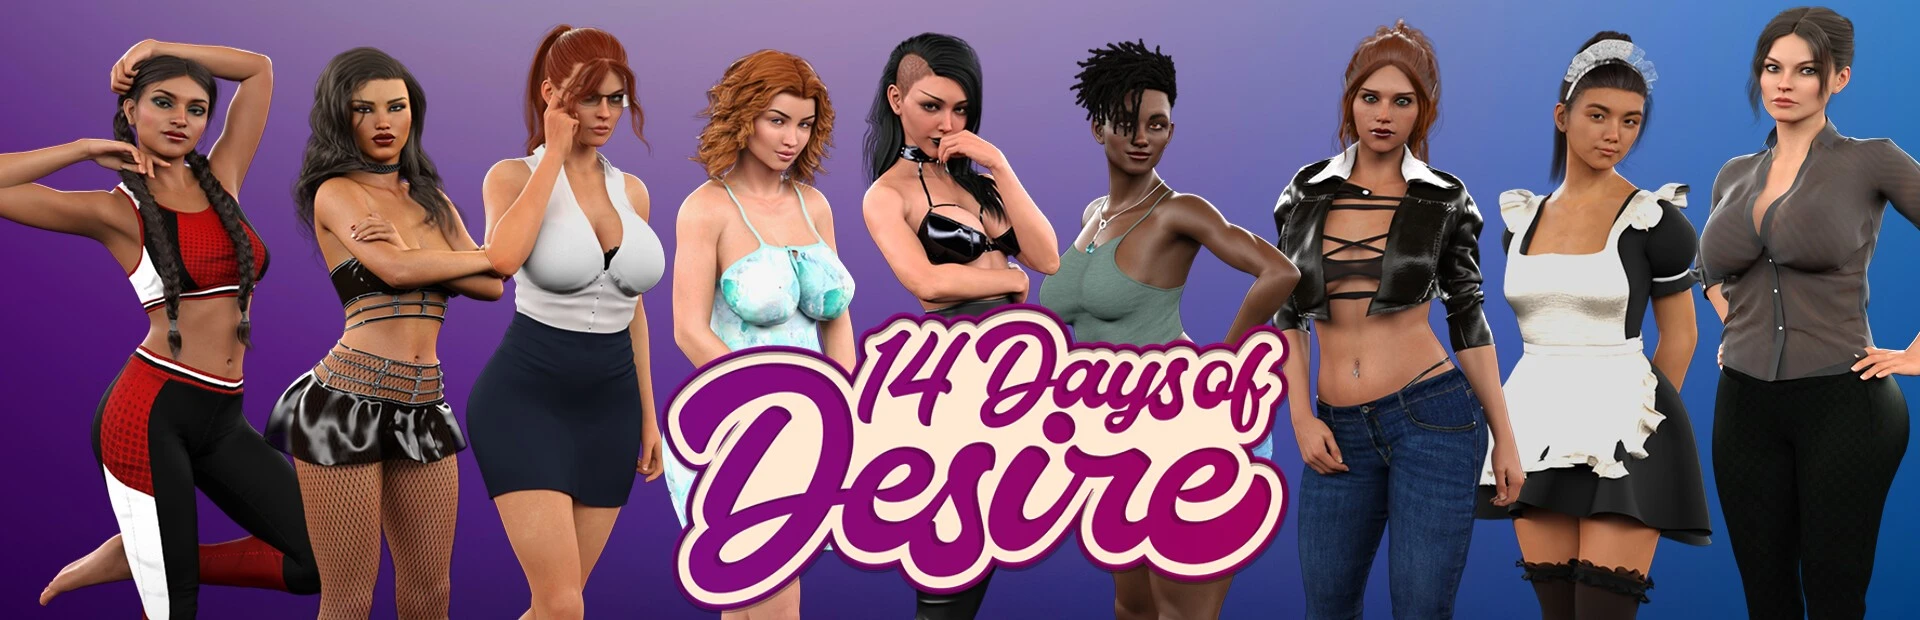 14 Days of Desire main image